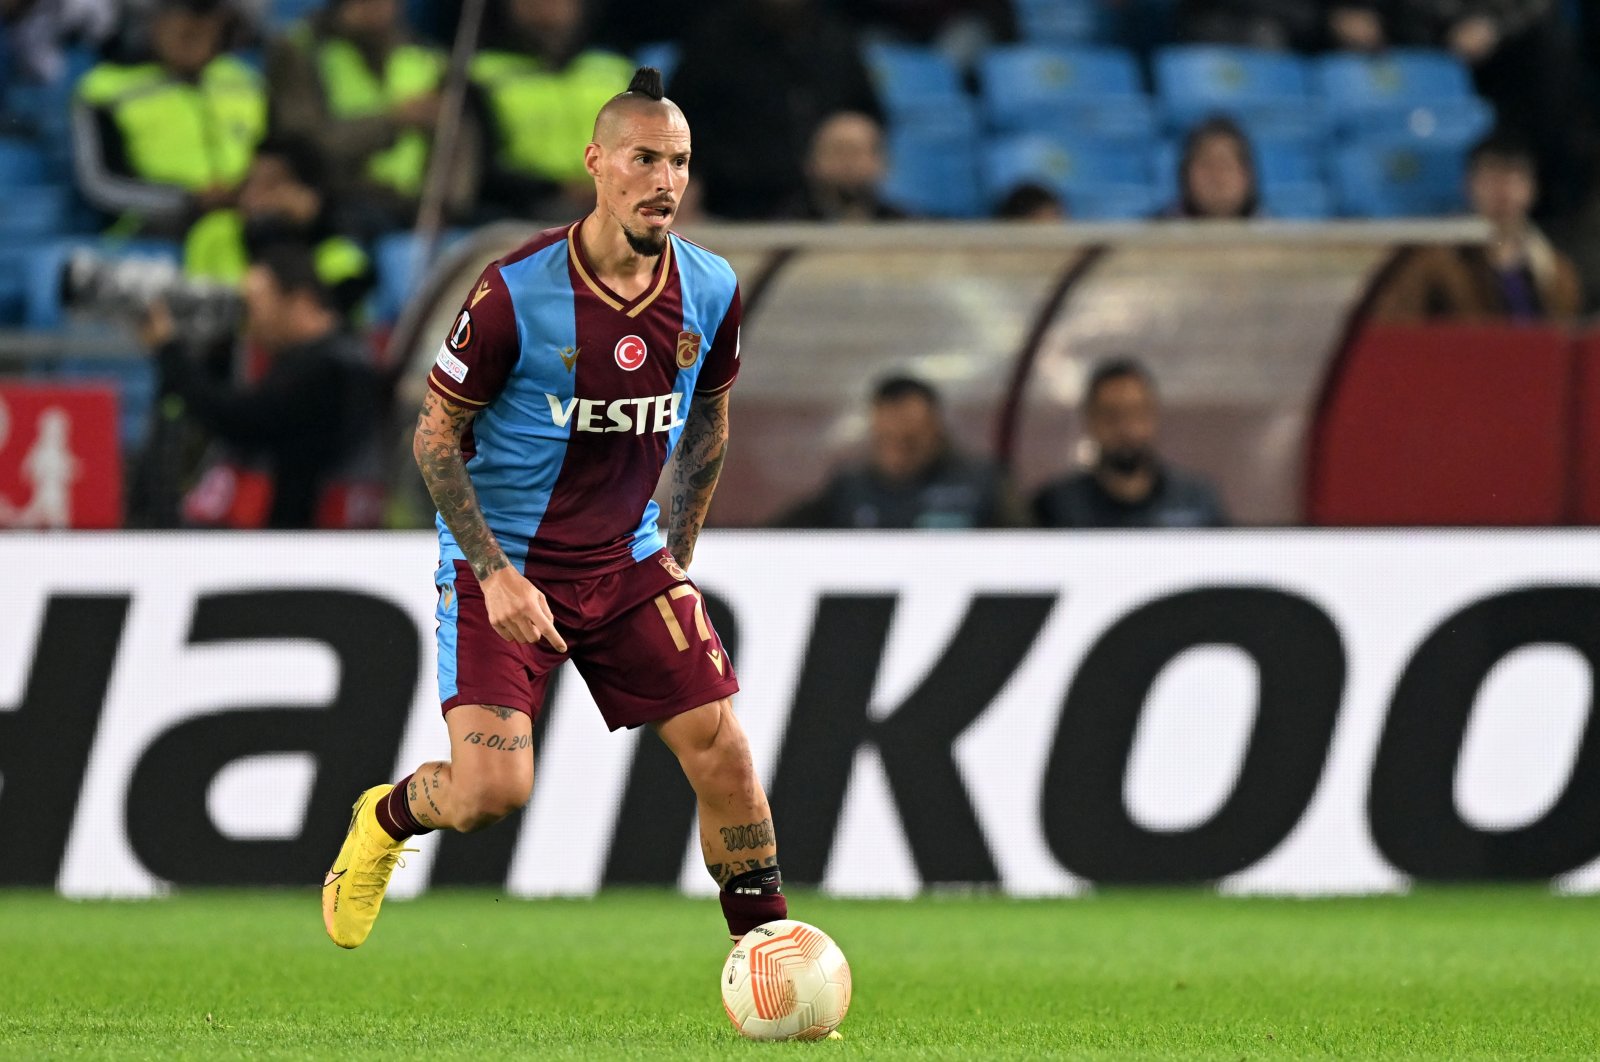 Napoli, Piala Dunia Qatar menggairahkan jimat Trabzonspor Hamsik